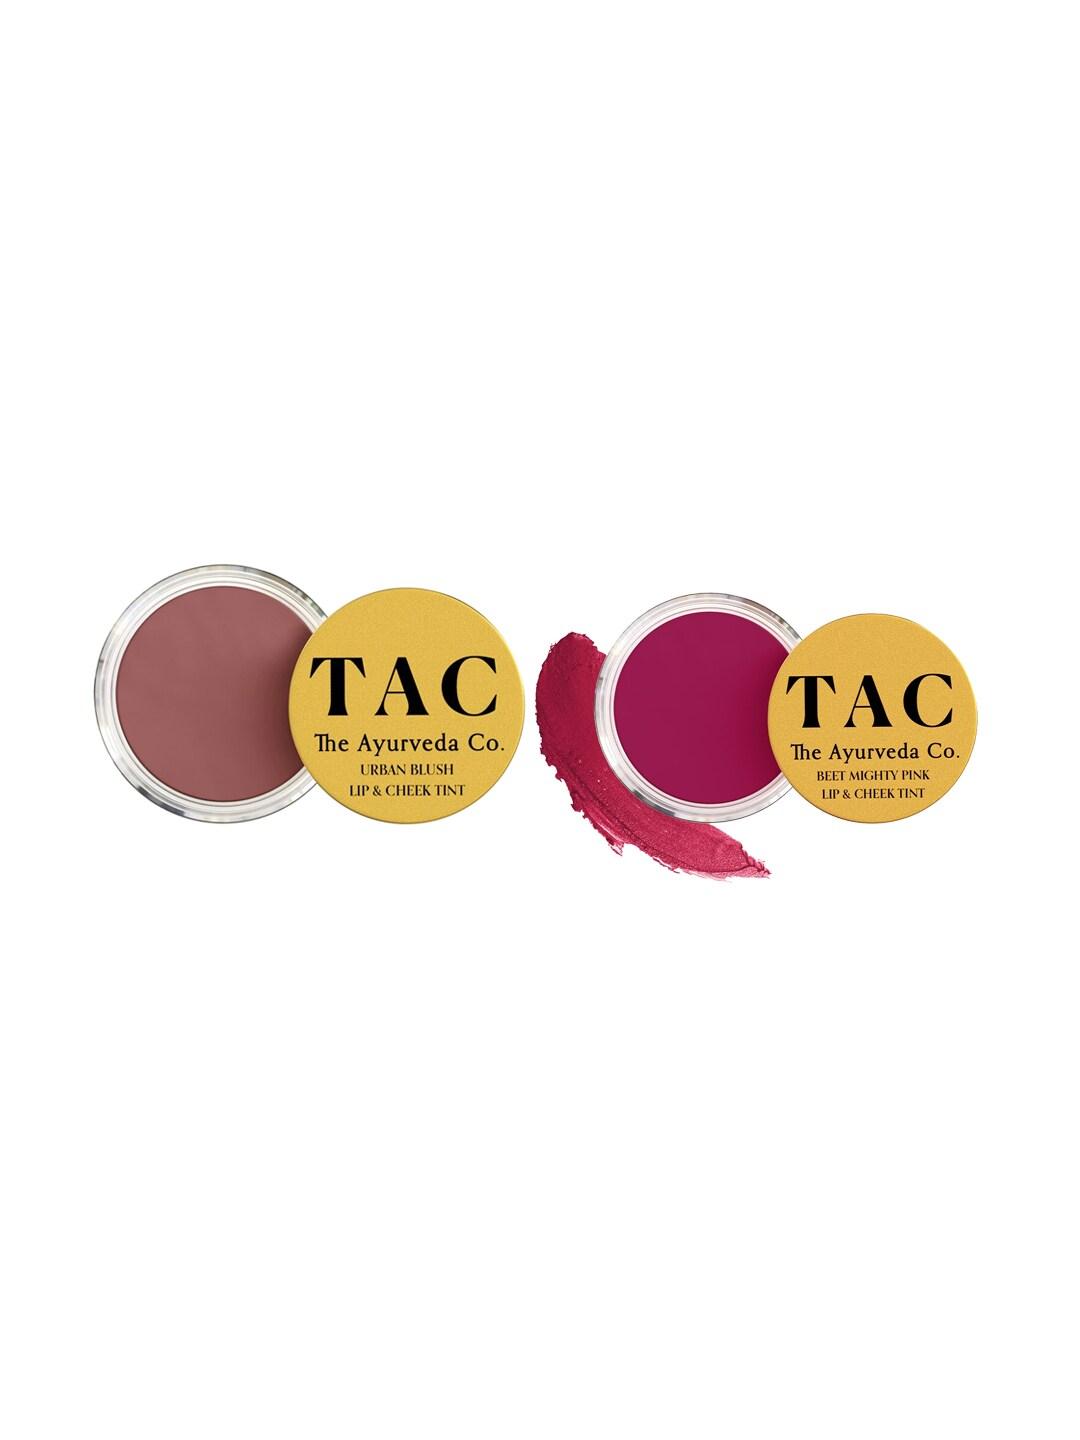 TAC - The Ayurveda Co. Set of 2 Lip & Cheek Tints - Urban Blush & Beet Mighty Pink